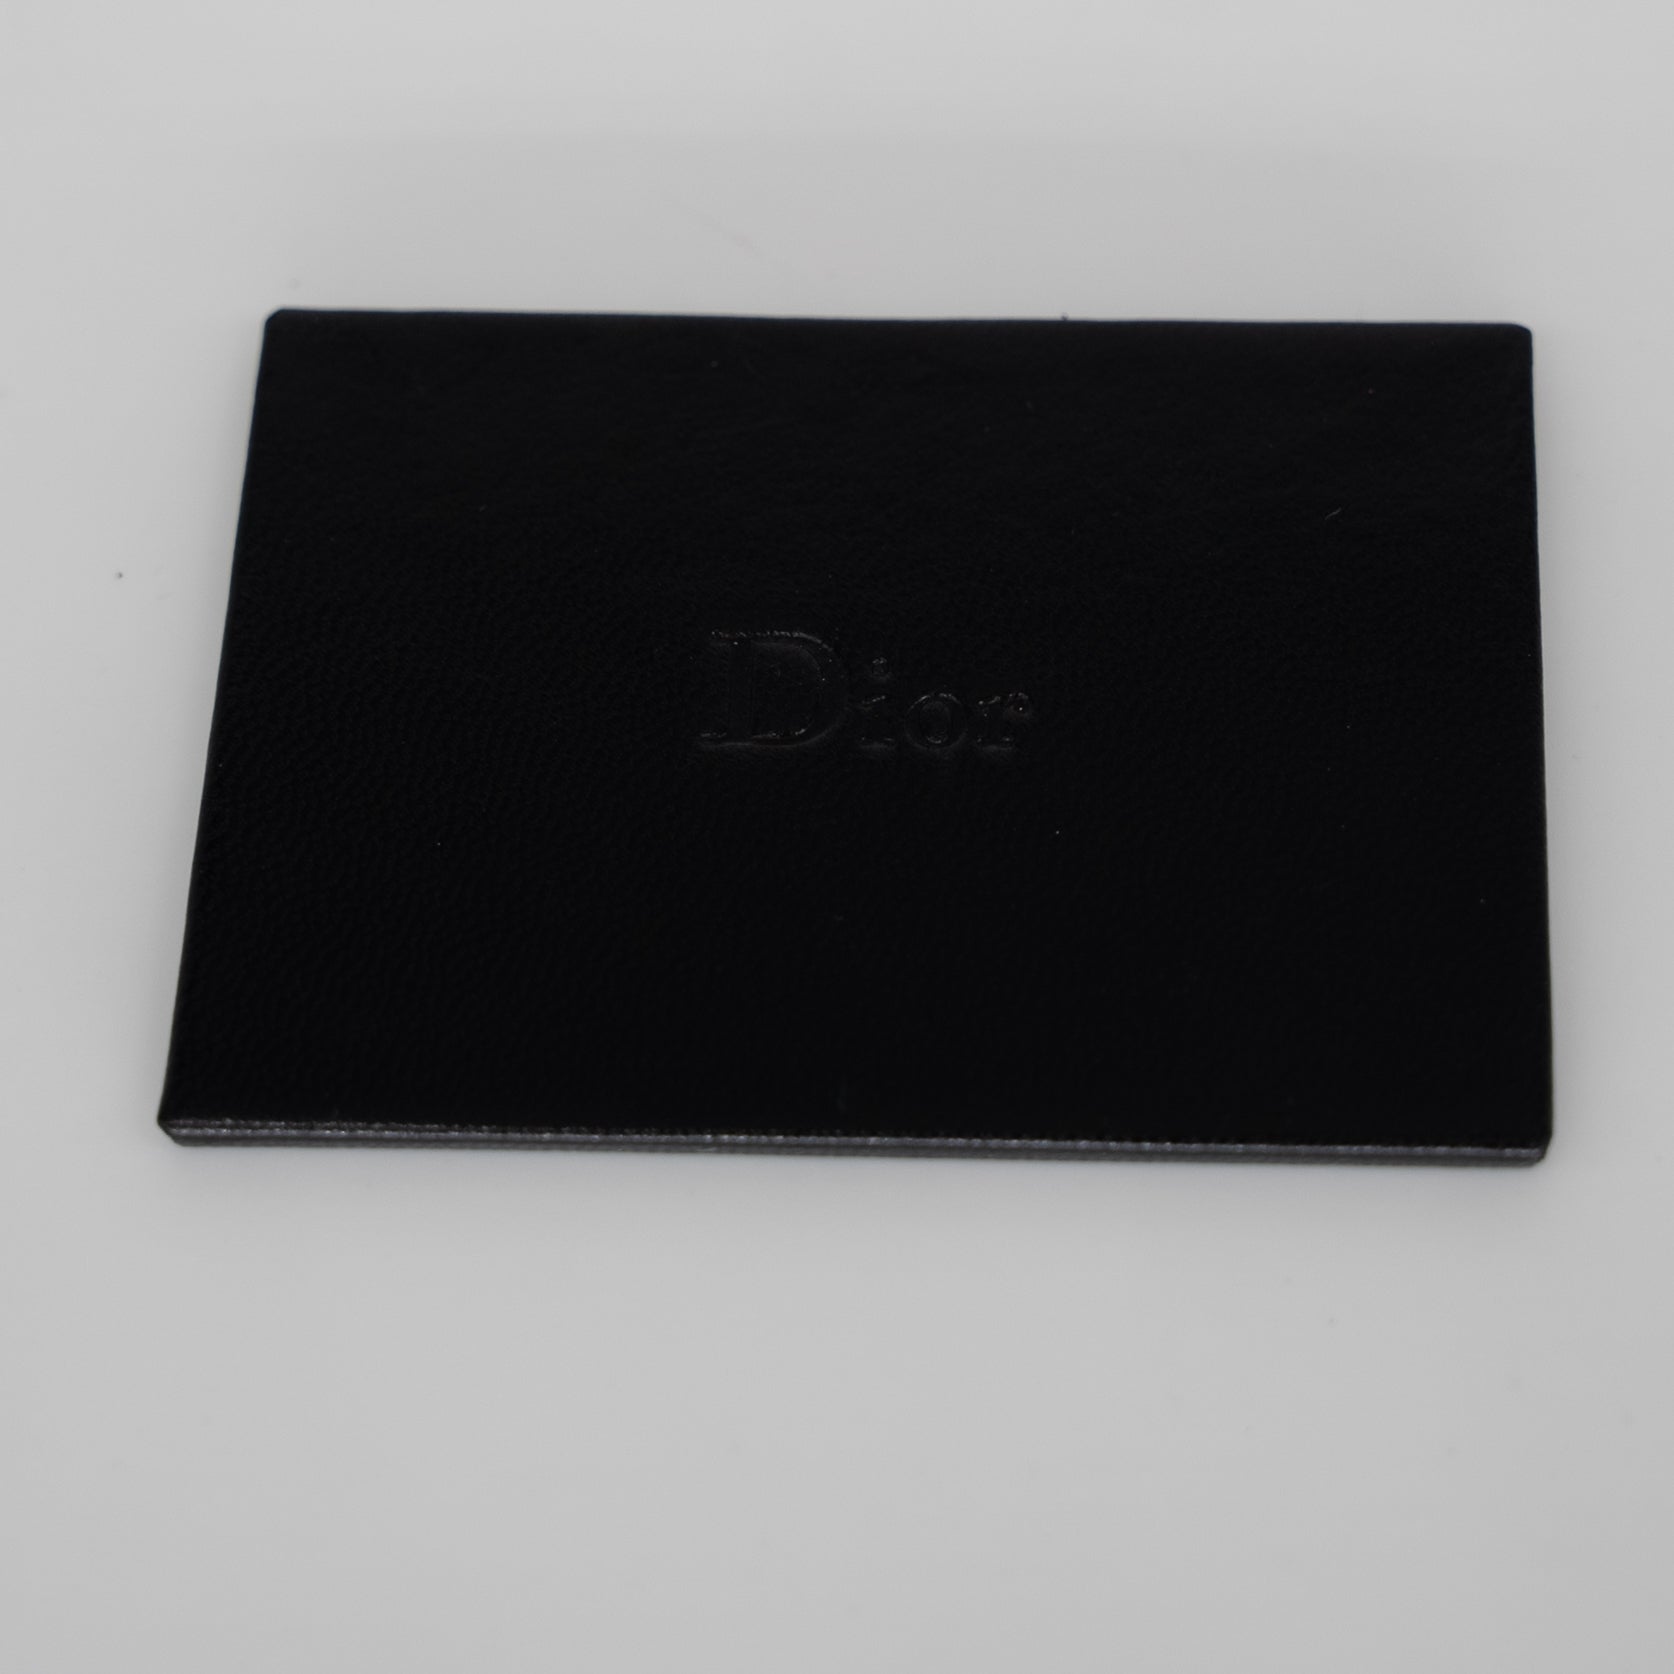 Christian Dior Embellished Beaded Black Mini Saddle Bag Limited Editio –  SINK VNTG